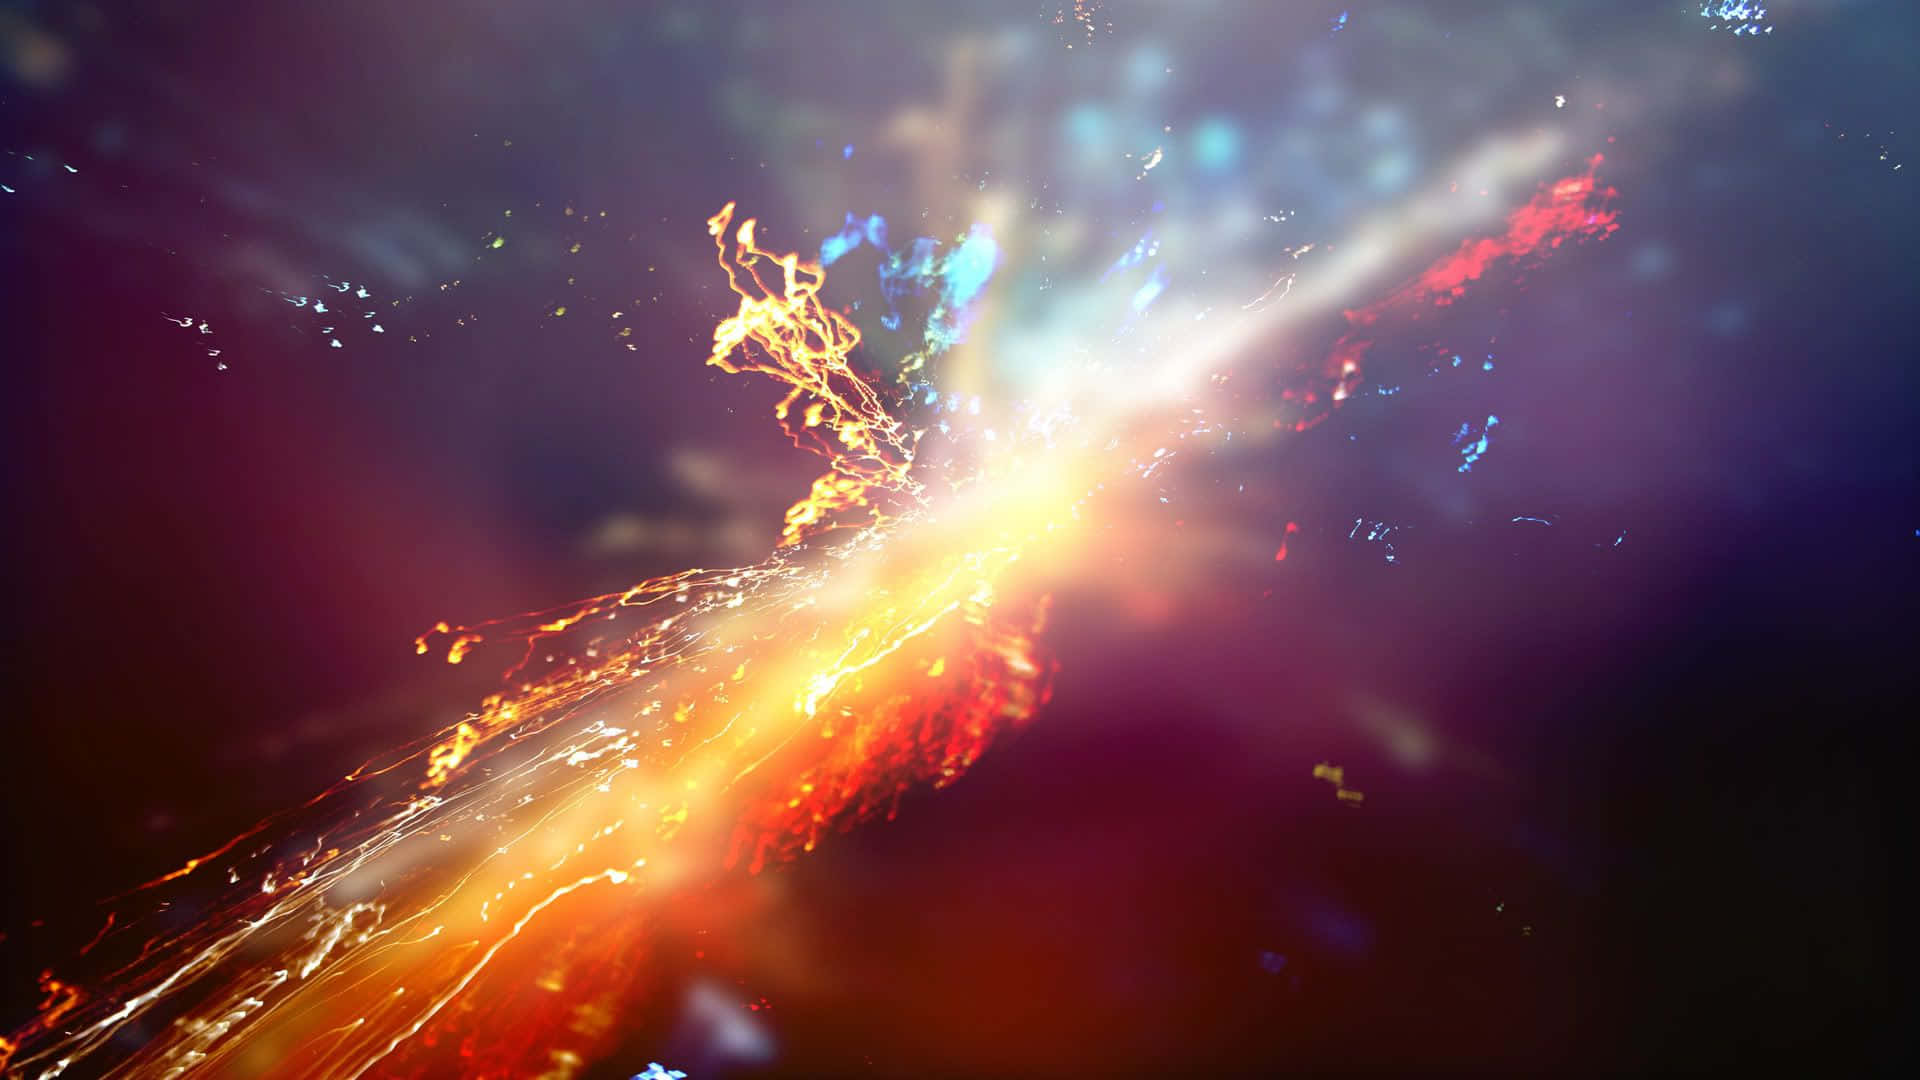 100+] Supernova Explosion Wallpapers